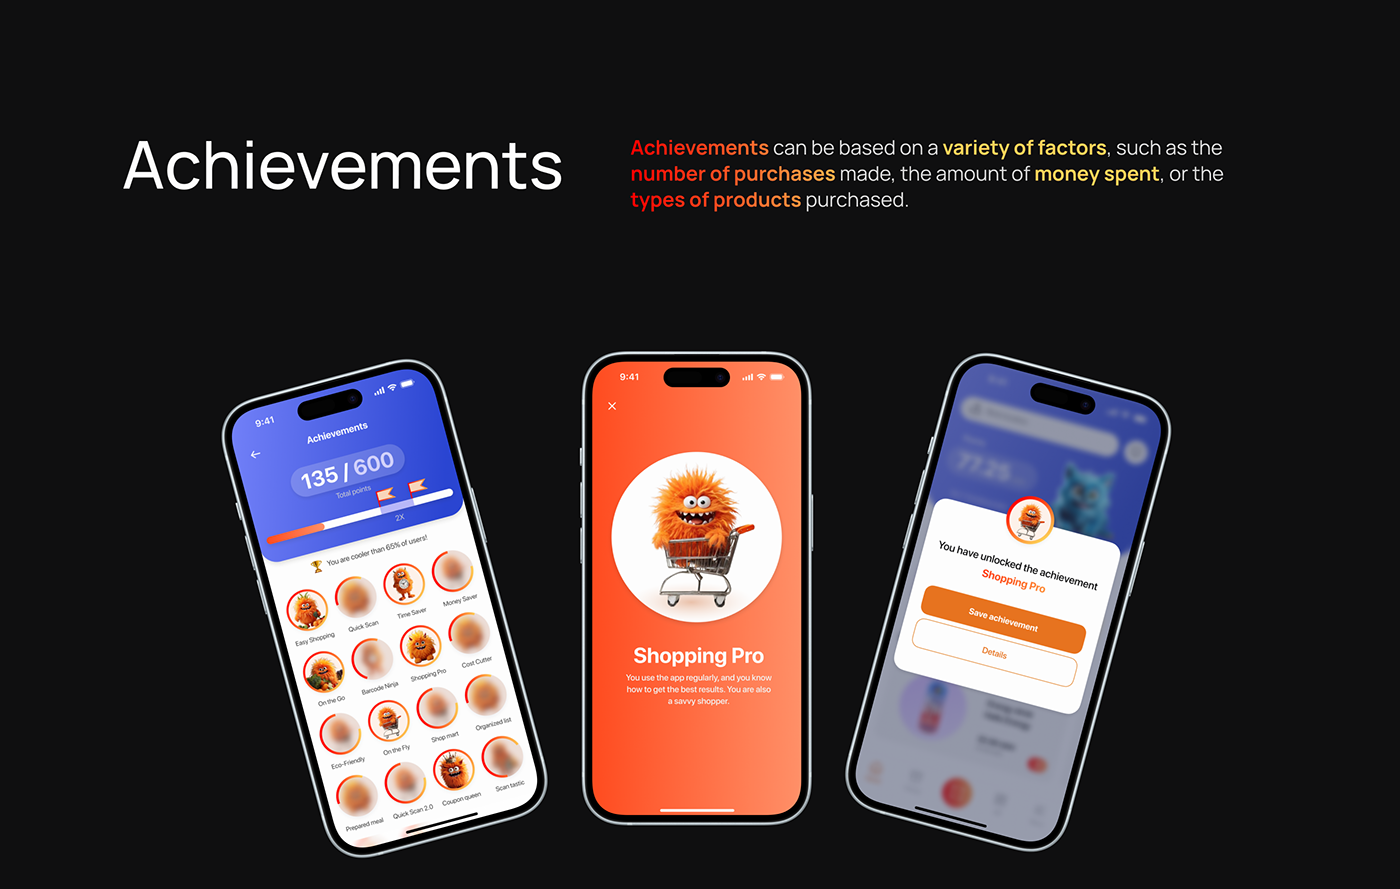 mobile app design Mobile app Mobile Application grocery shopping scan and go ui design mobile design app design Grocery App barcode